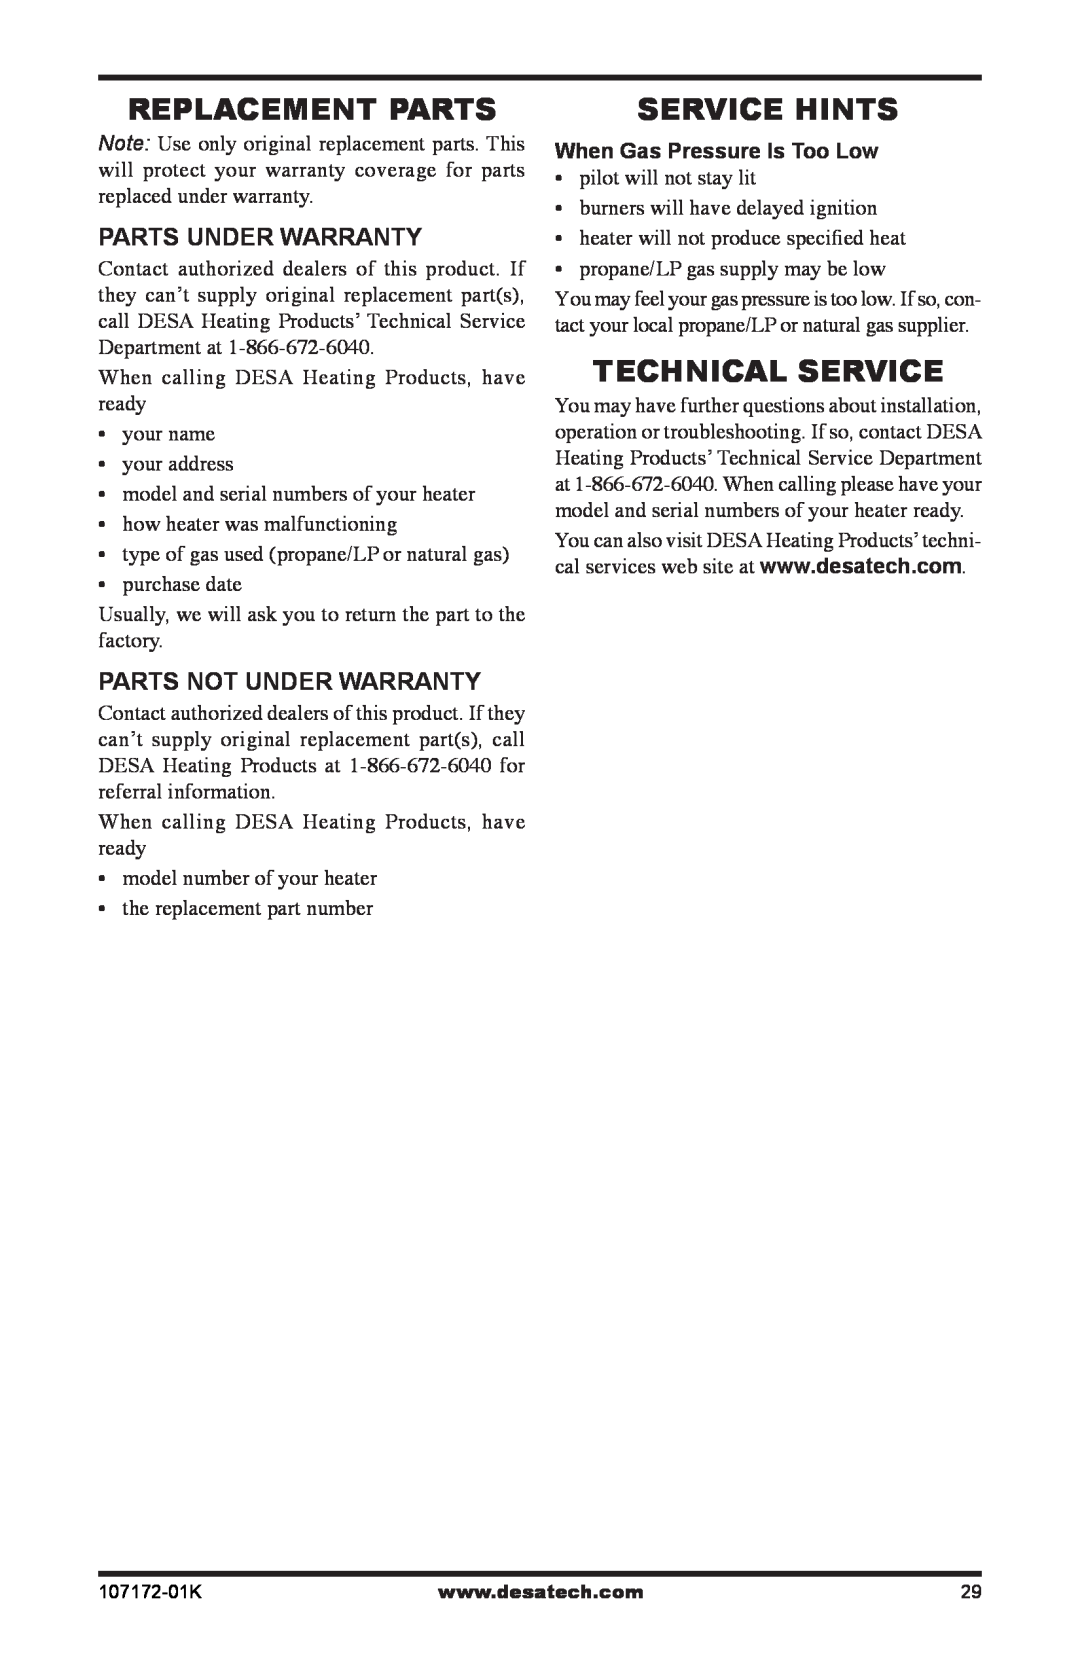 Desa VSGF33NRA Replacement Parts, Service Hints, Technical Service, Parts Under Warranty, Parts Not Under Warranty 